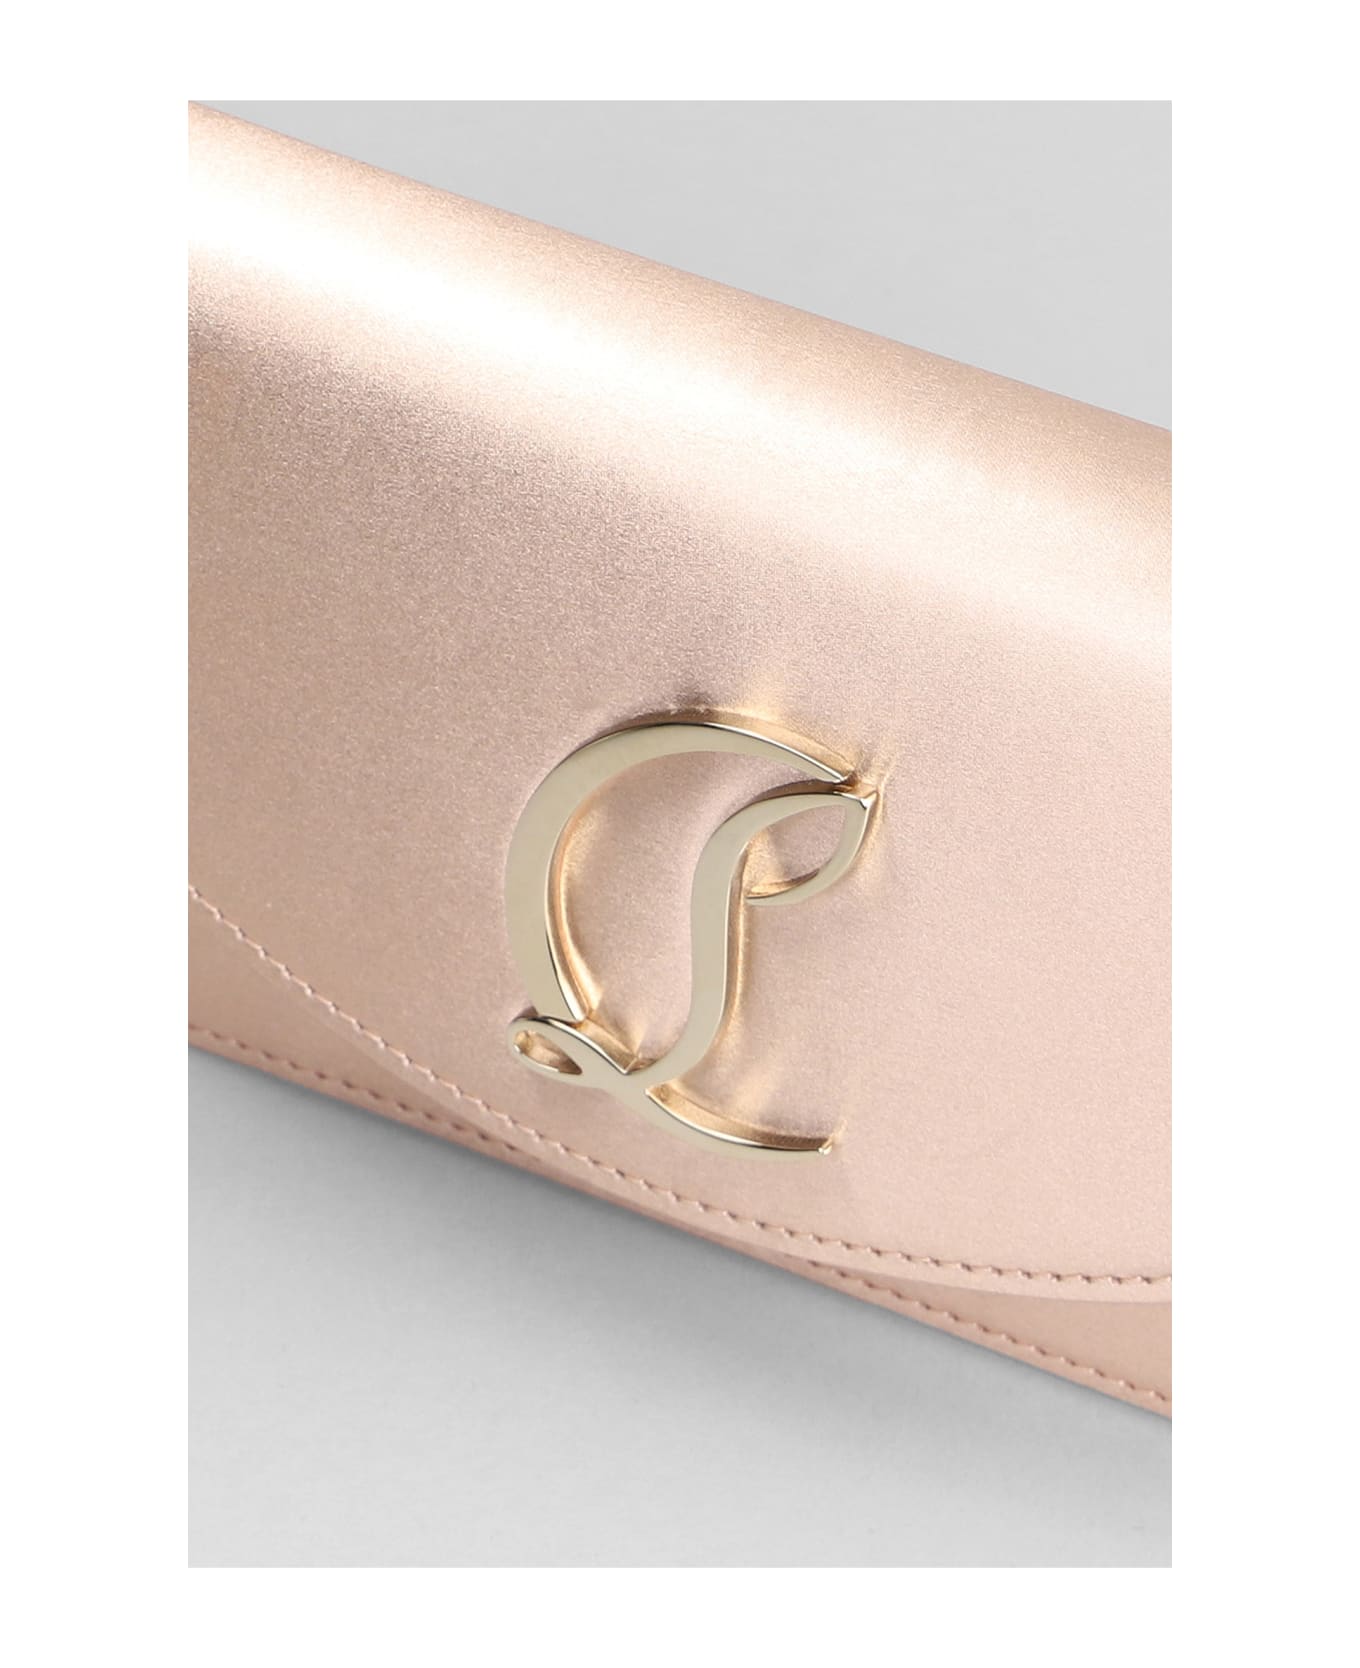 Christian Louboutin Loubi54 Hand Bag In Rose-pink Silk - Golden クラッチバッグ